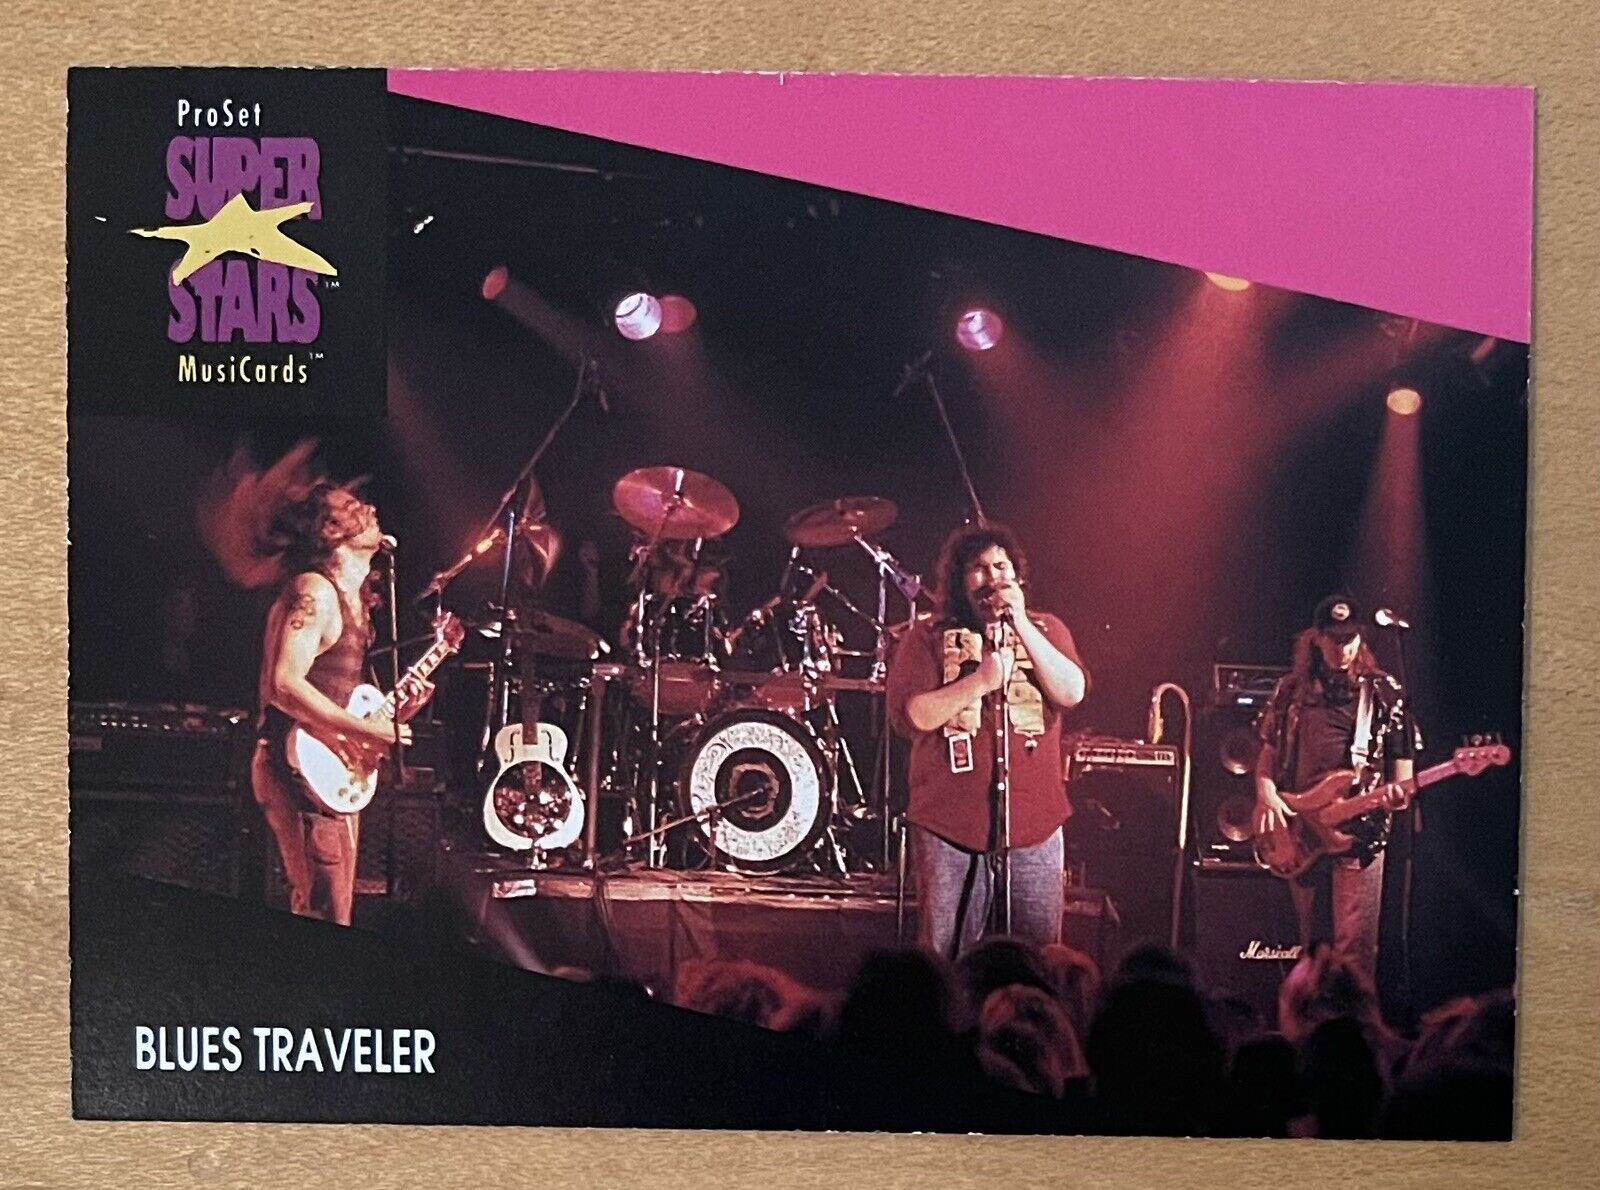 Blues Traveler 1991 Pro Set Super Stars Music Cards #152 Mint Condition